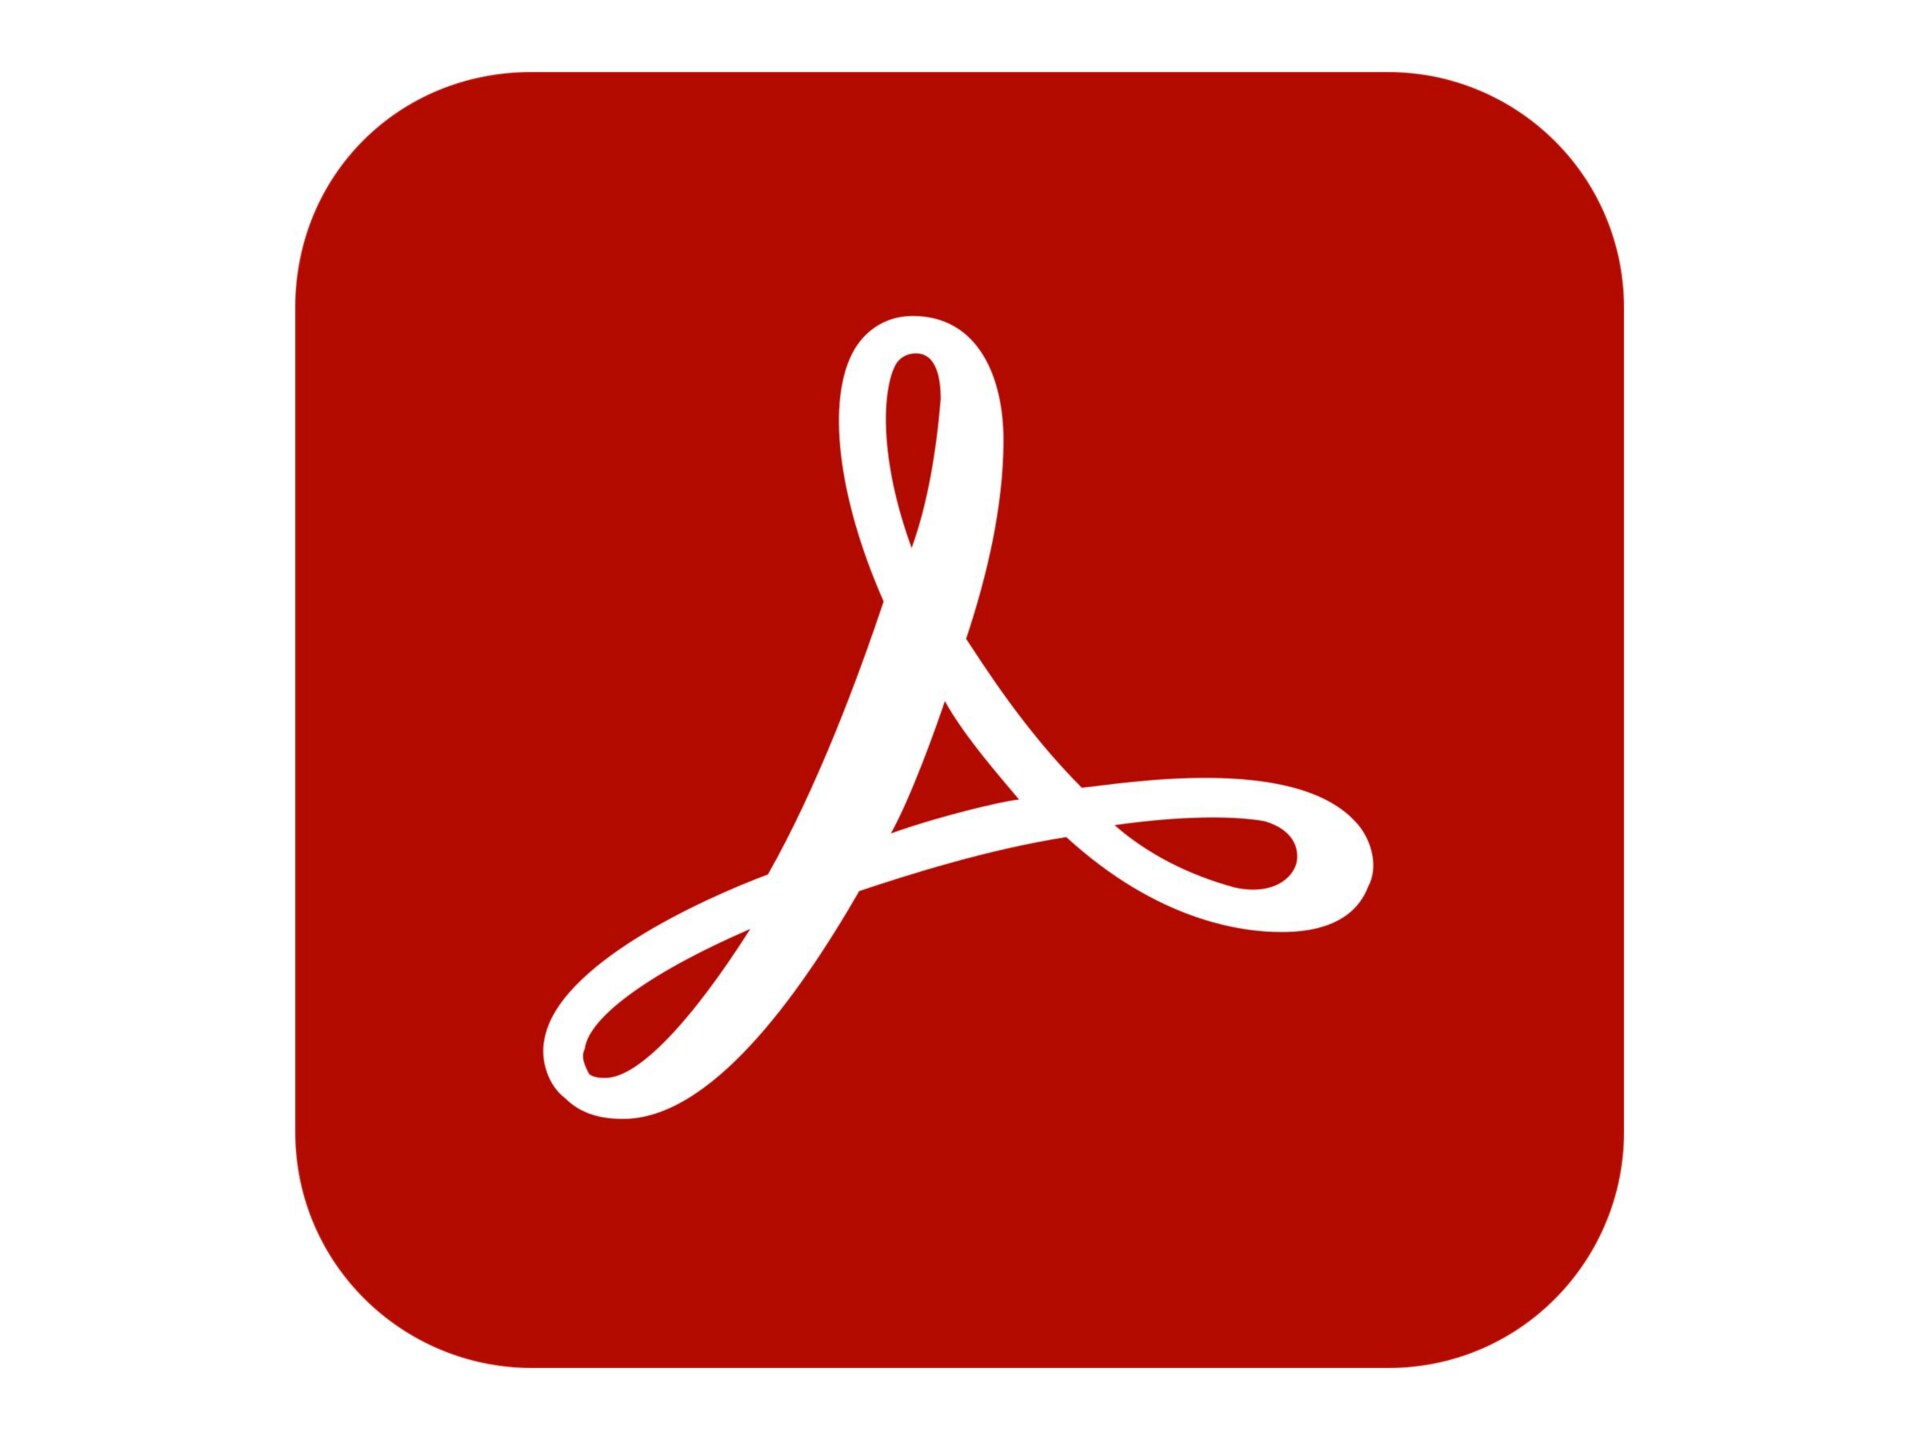 Adobe Acrobat Pro DC for Enterprise - Subscription Renewal - 1 user